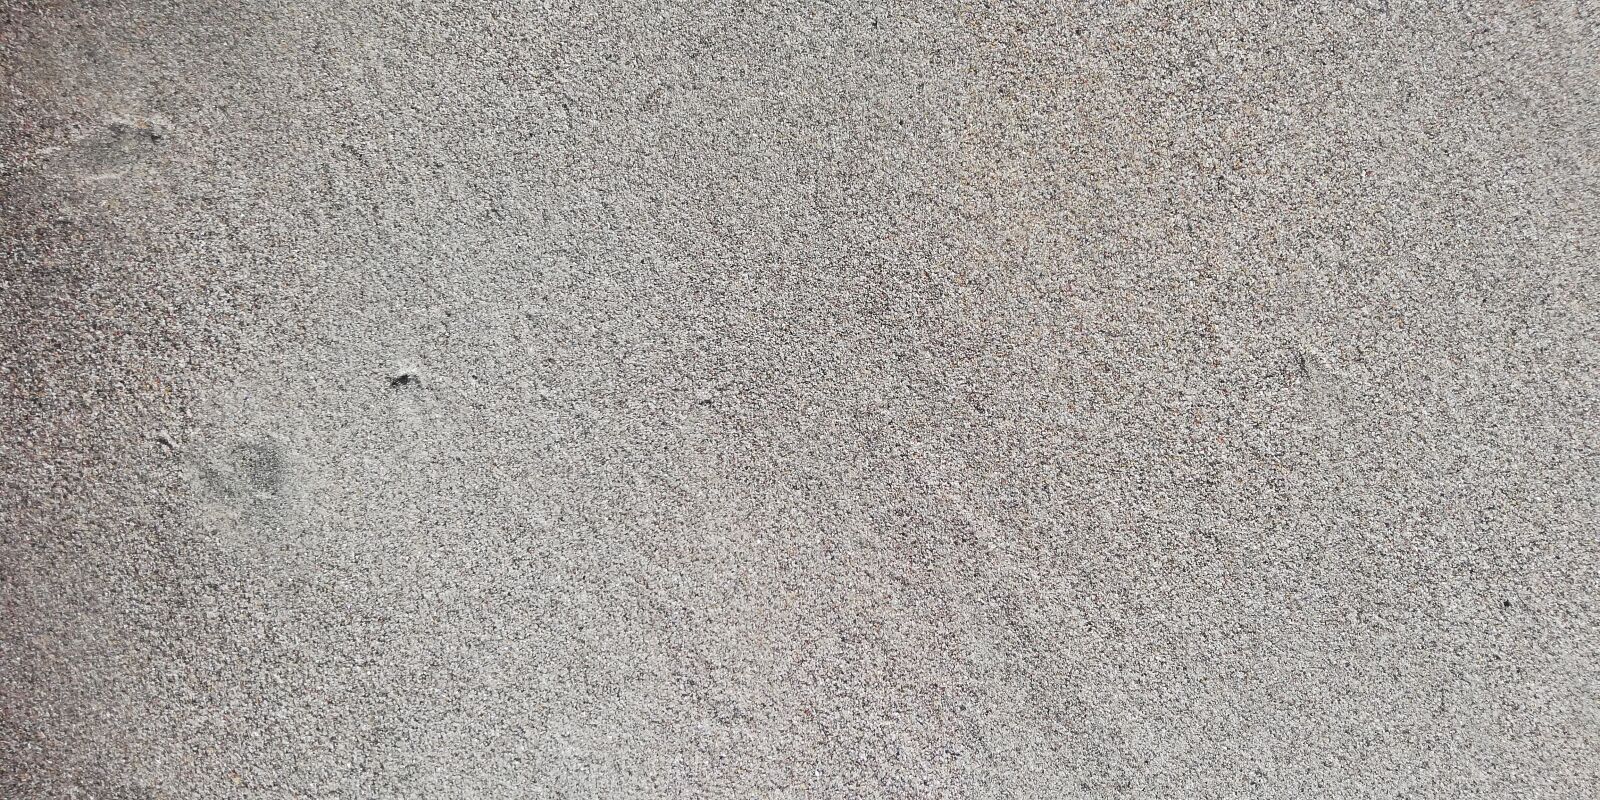 HUAWEI Mate 10 Lite sample photo. Sand, arena, beach photography